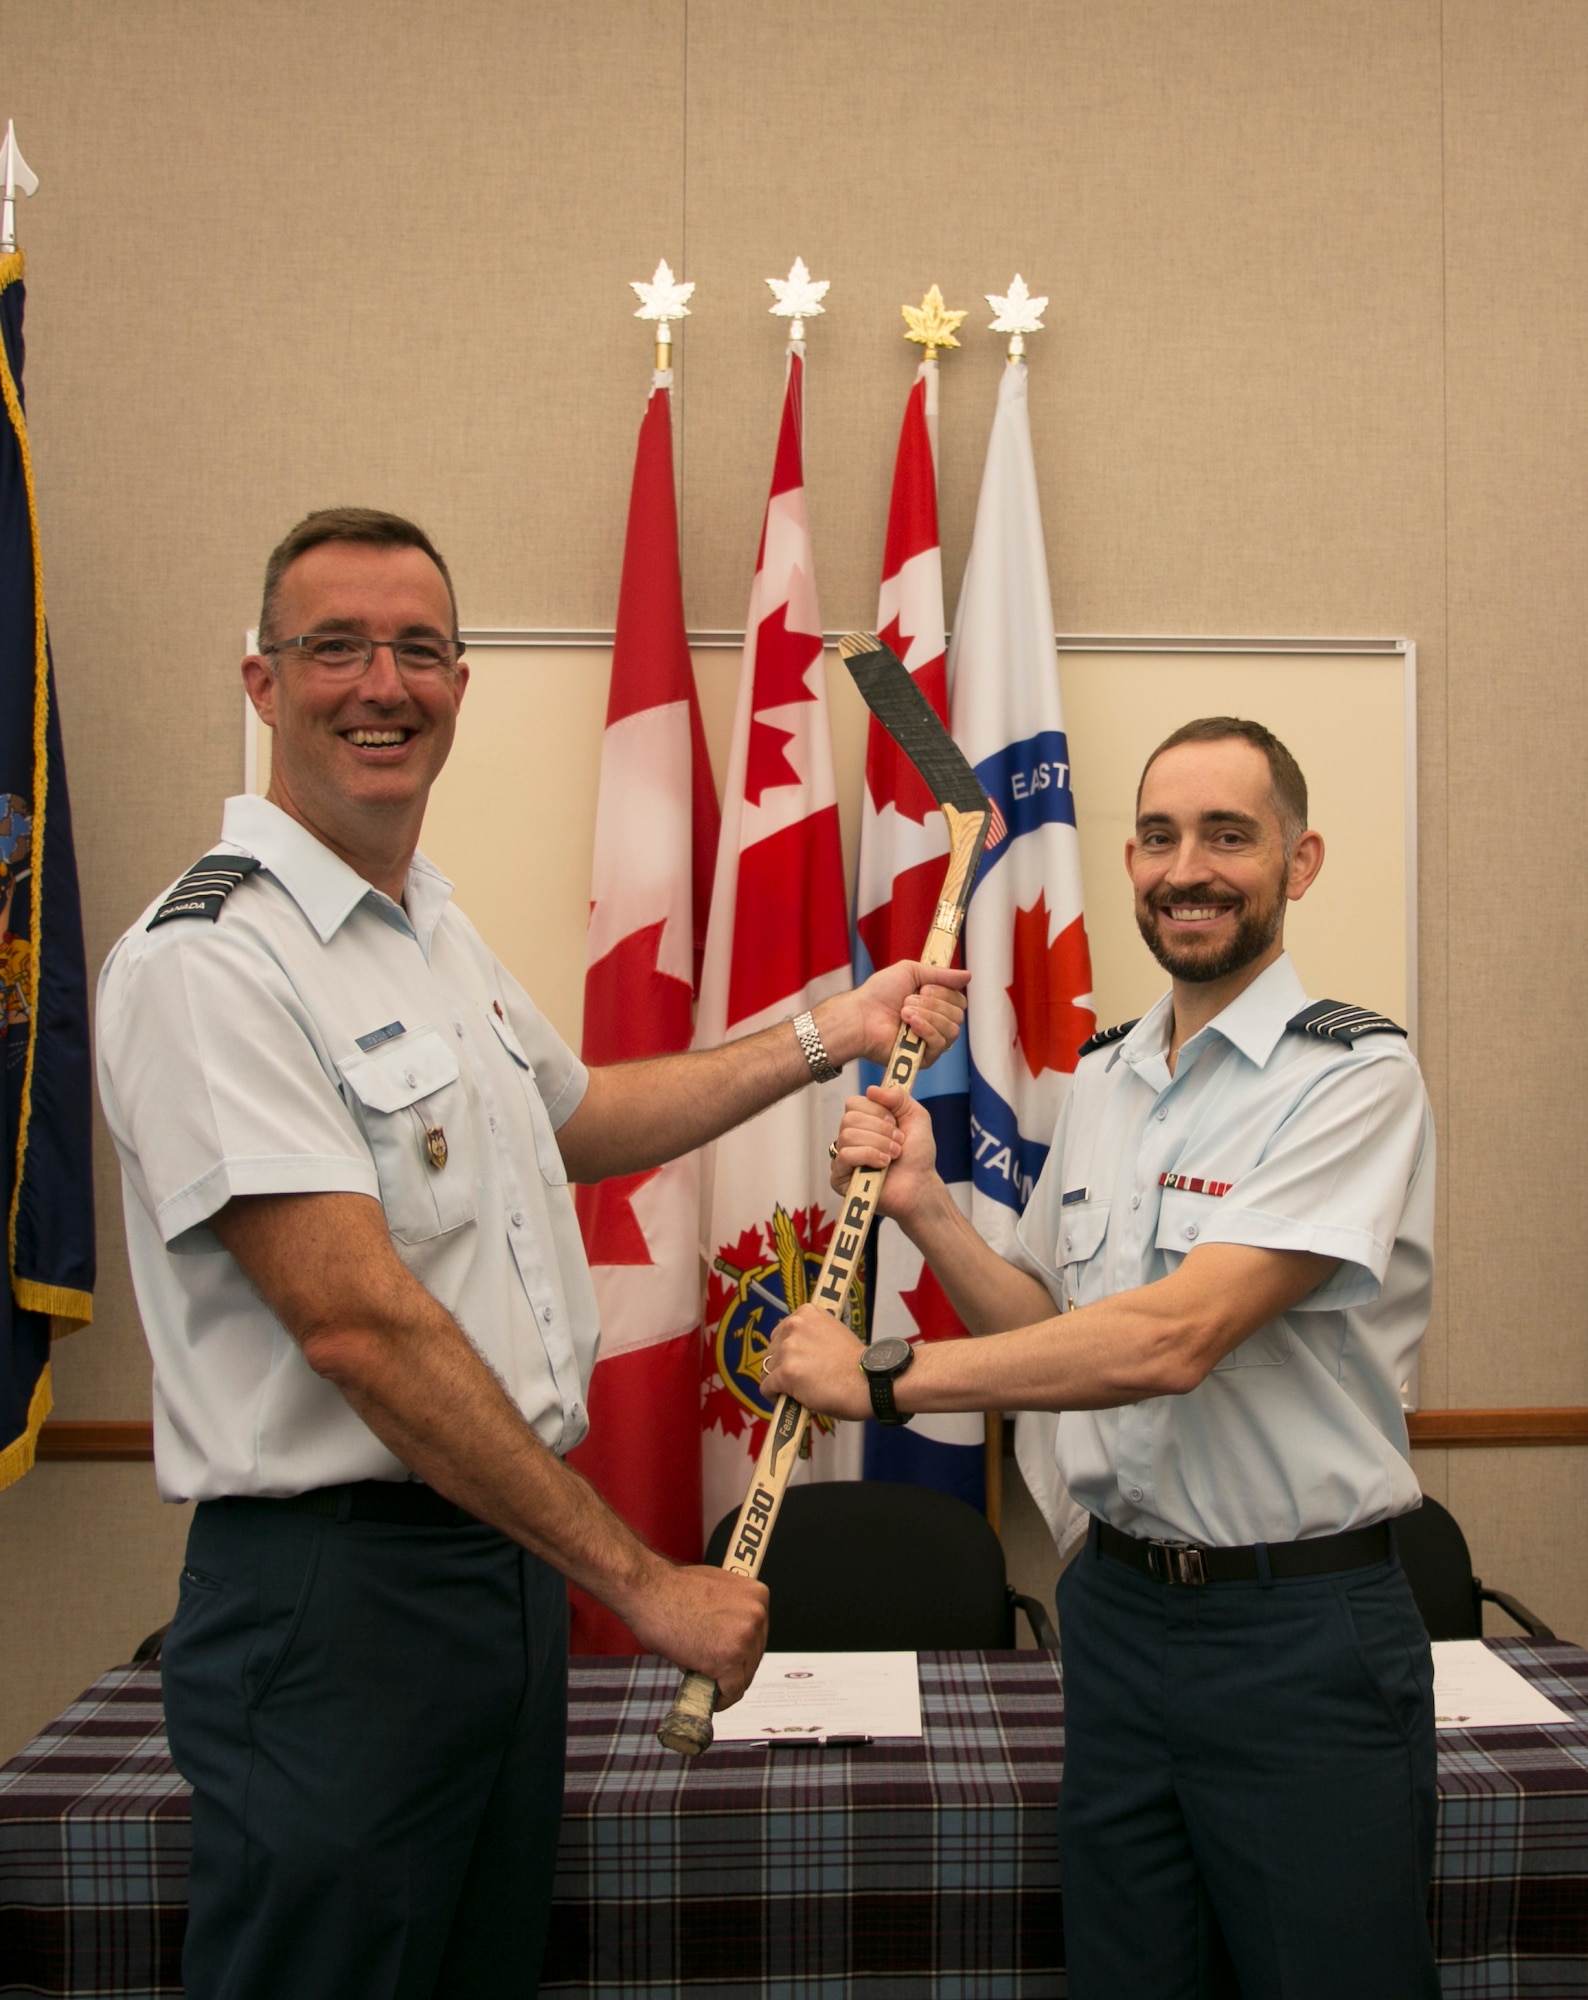 LCol Klemen is new Canadian Commander